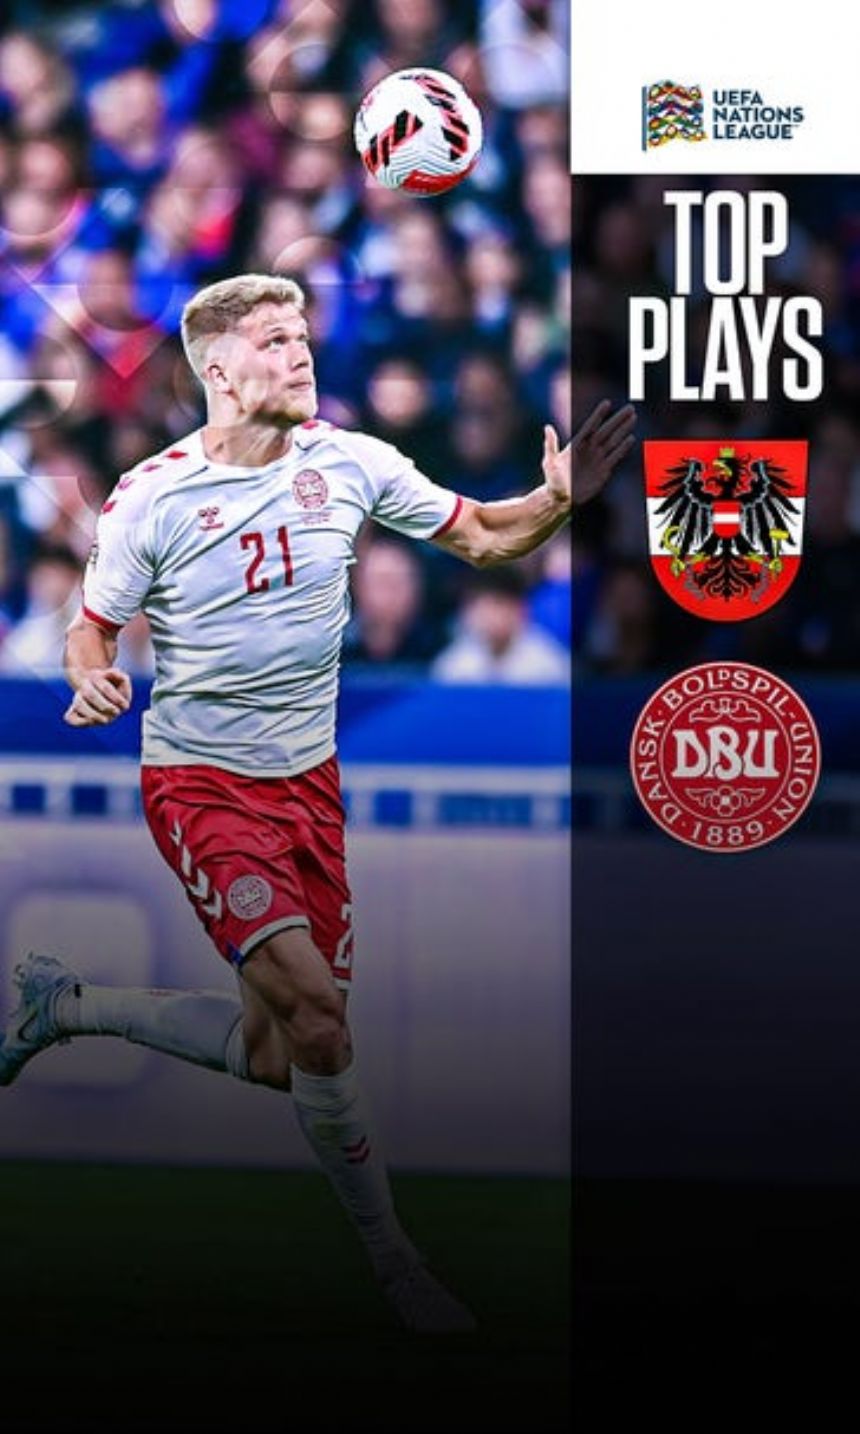 UEFA Nations League: Denmark-Austria, France-Croatia top plays